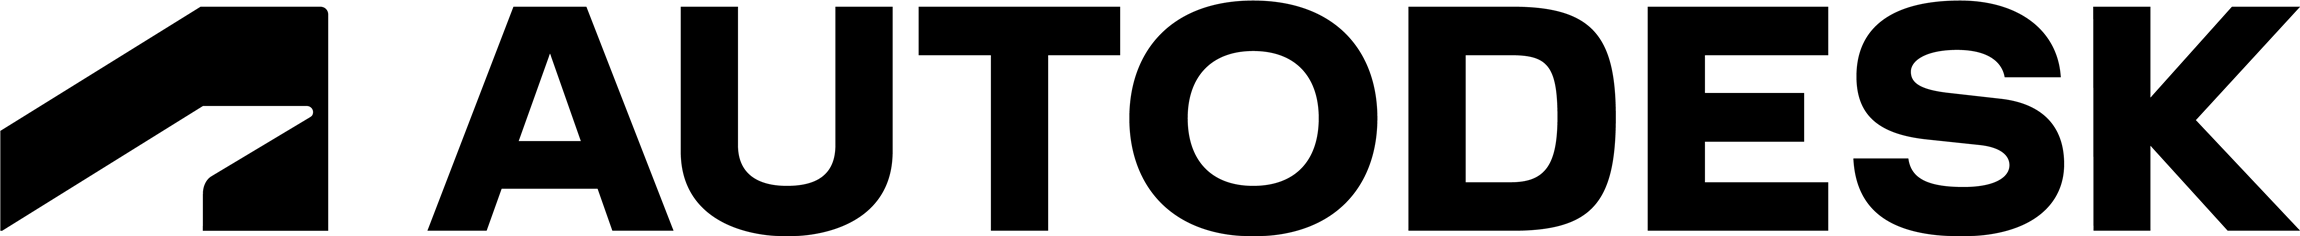 autodesk-logo-primary-cmyk-rich-black.png